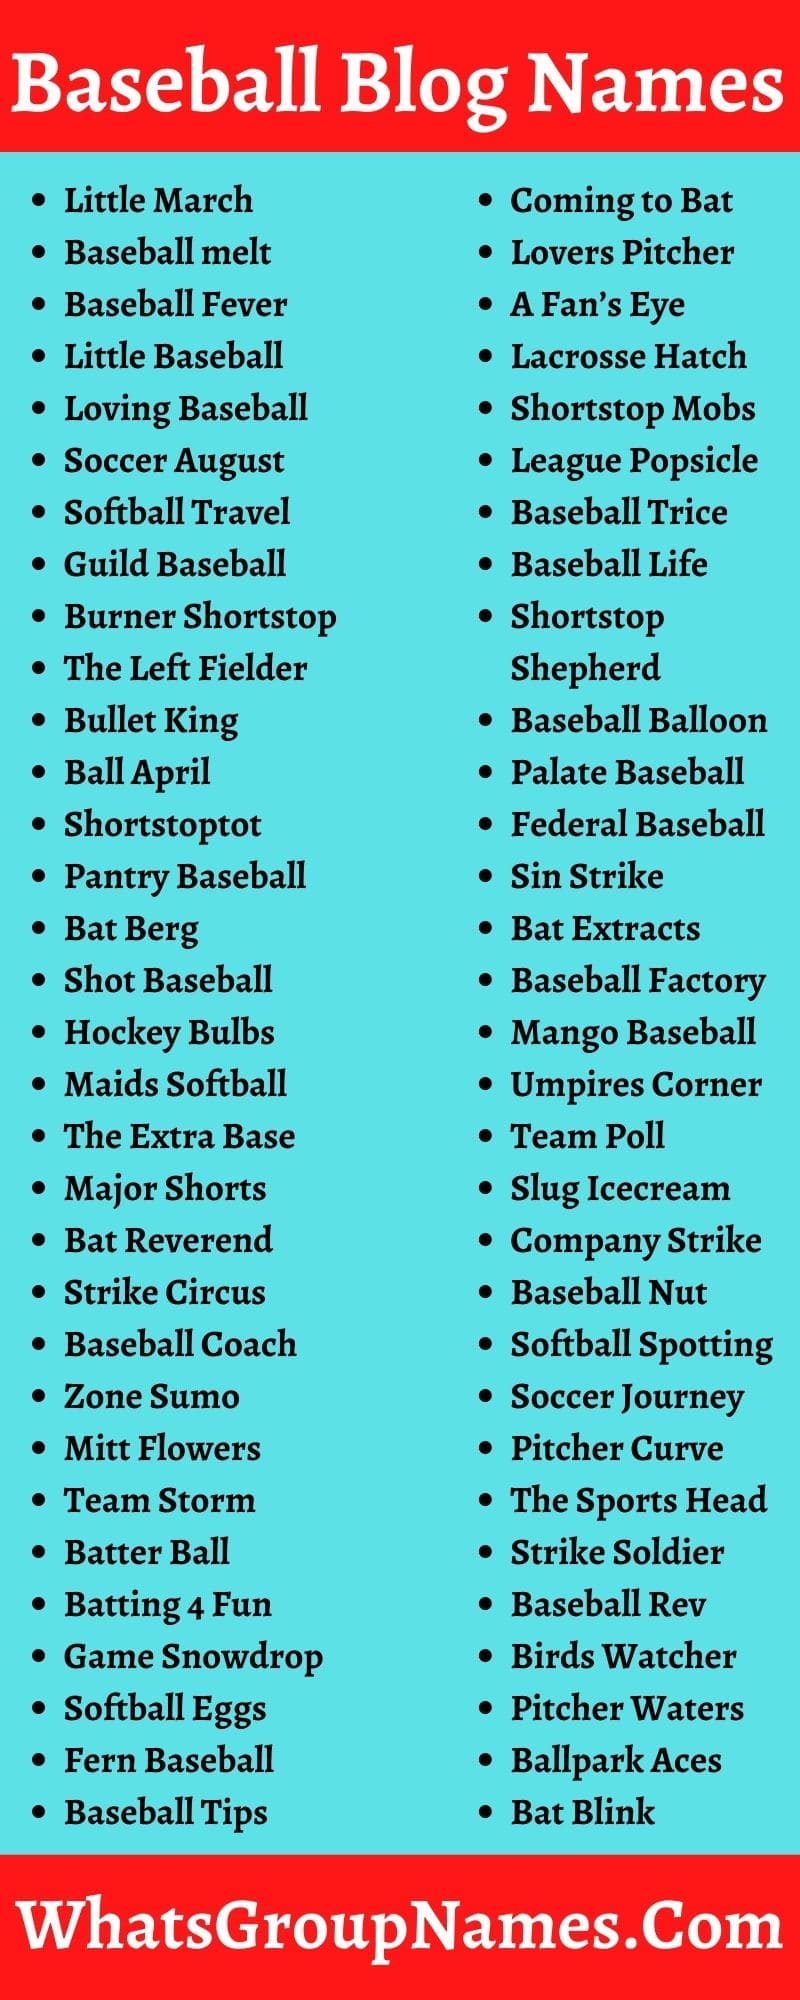 Baseball Blog Names